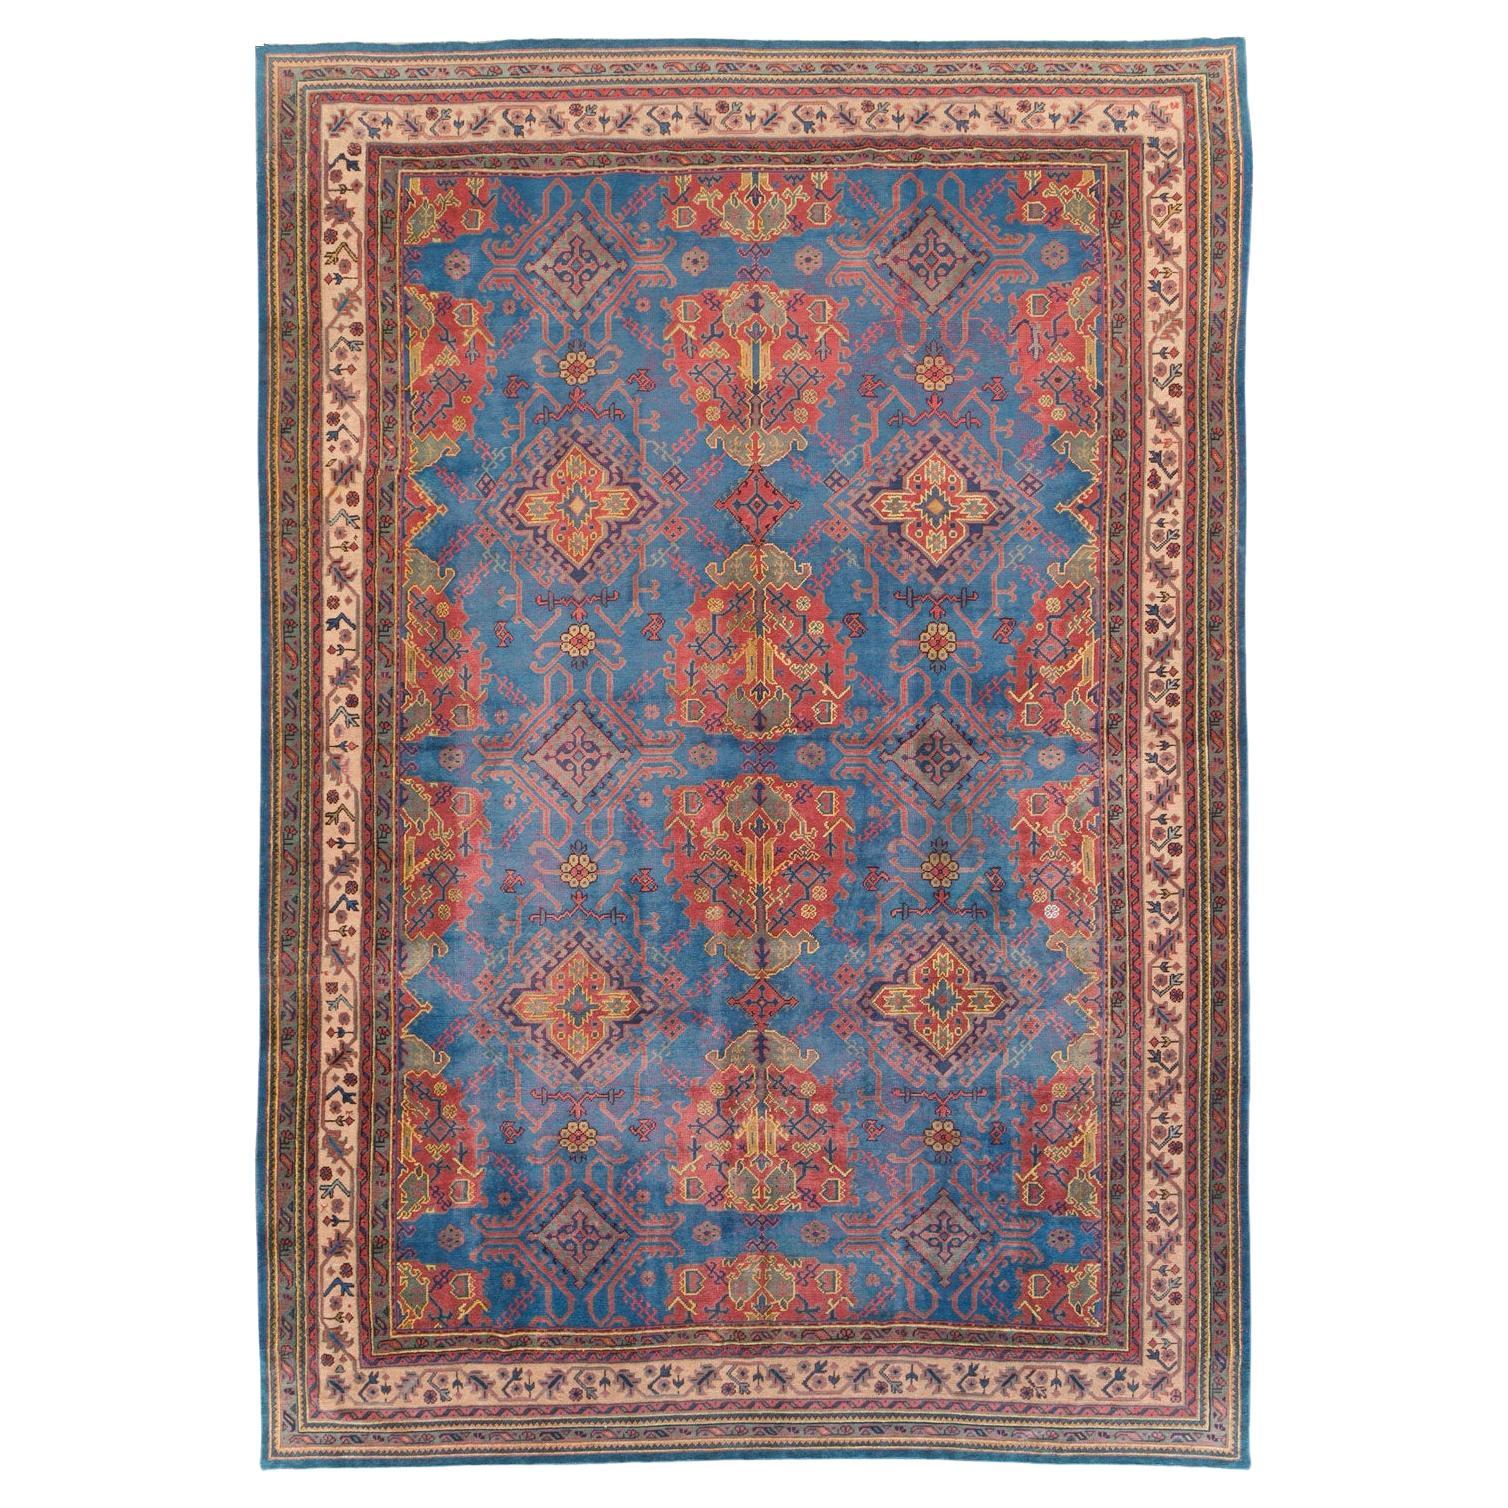 Early 20th Century Handmade Turkish Oushak Large Carpet For Sale